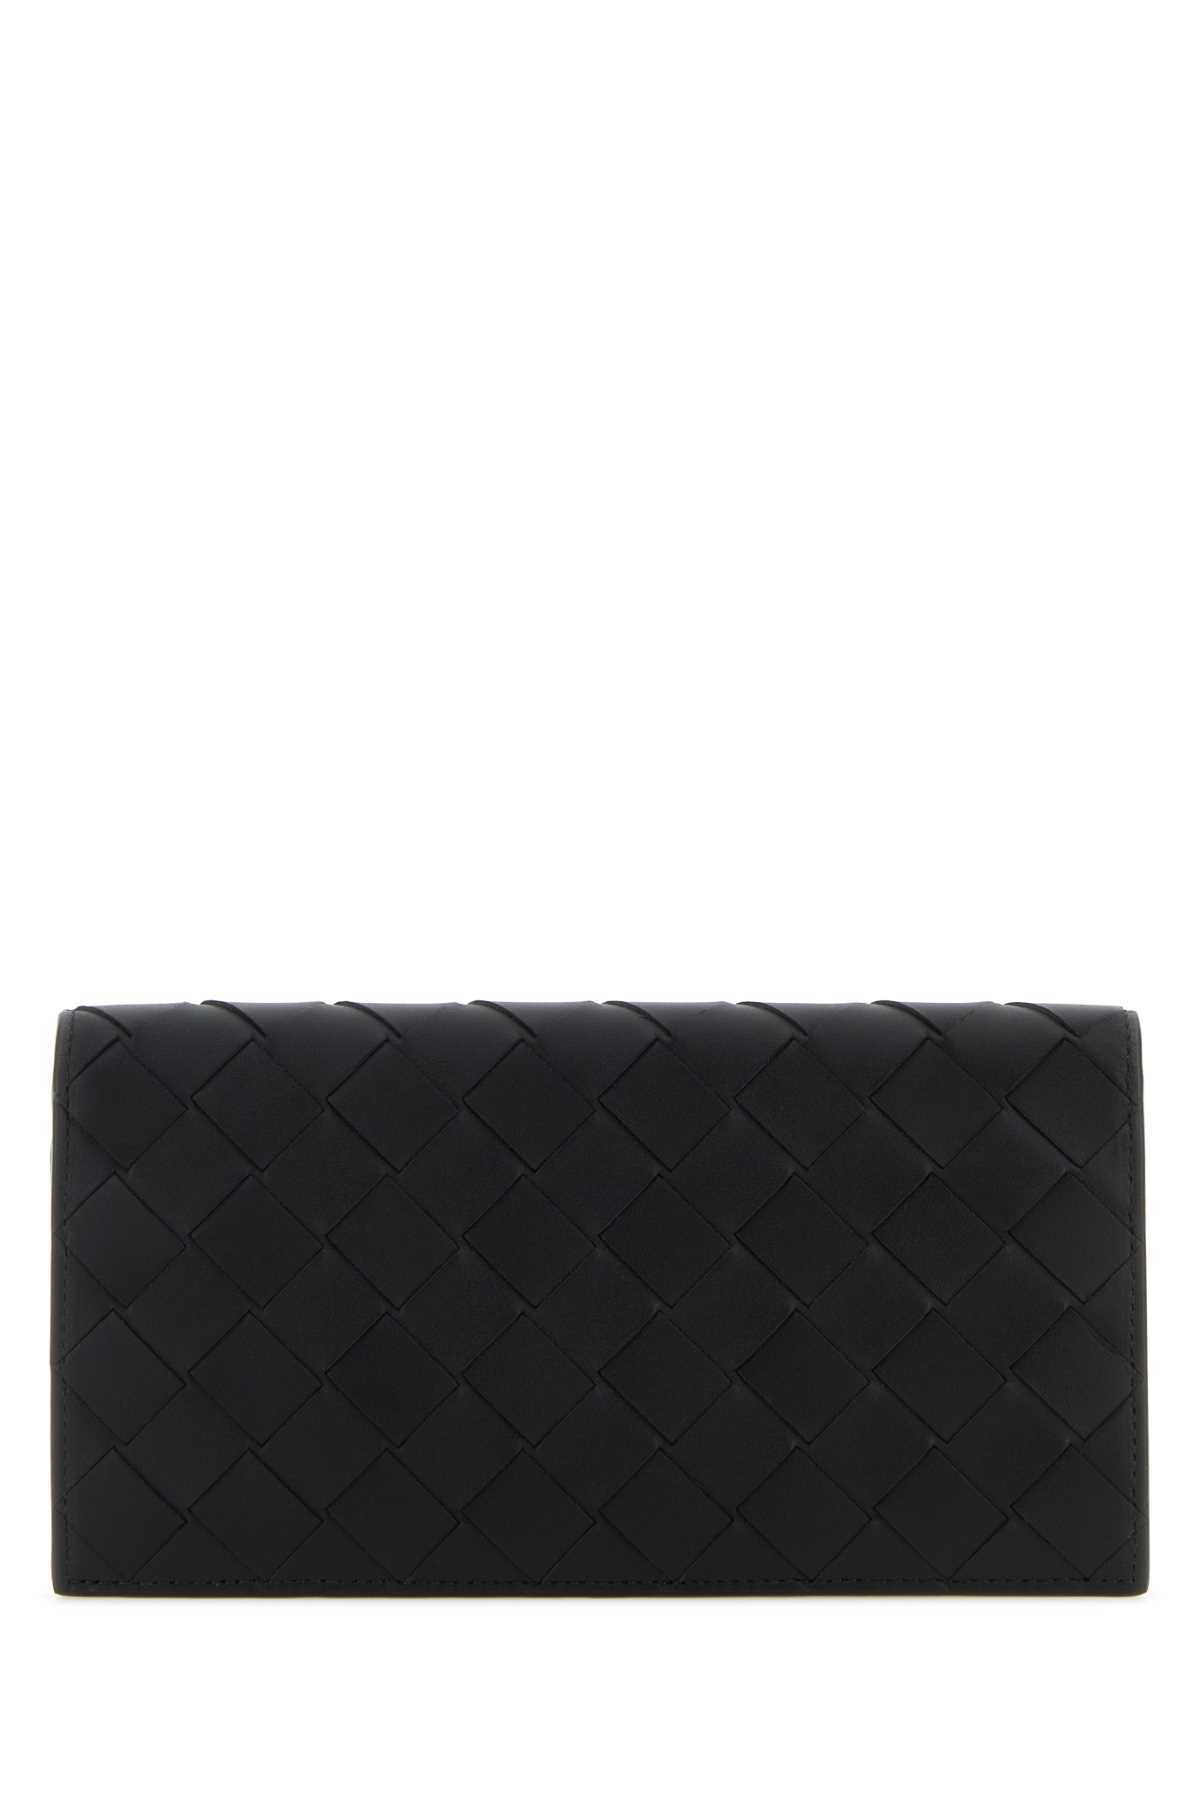 Shop Bottega Veneta Black Leather Wallet In Blk